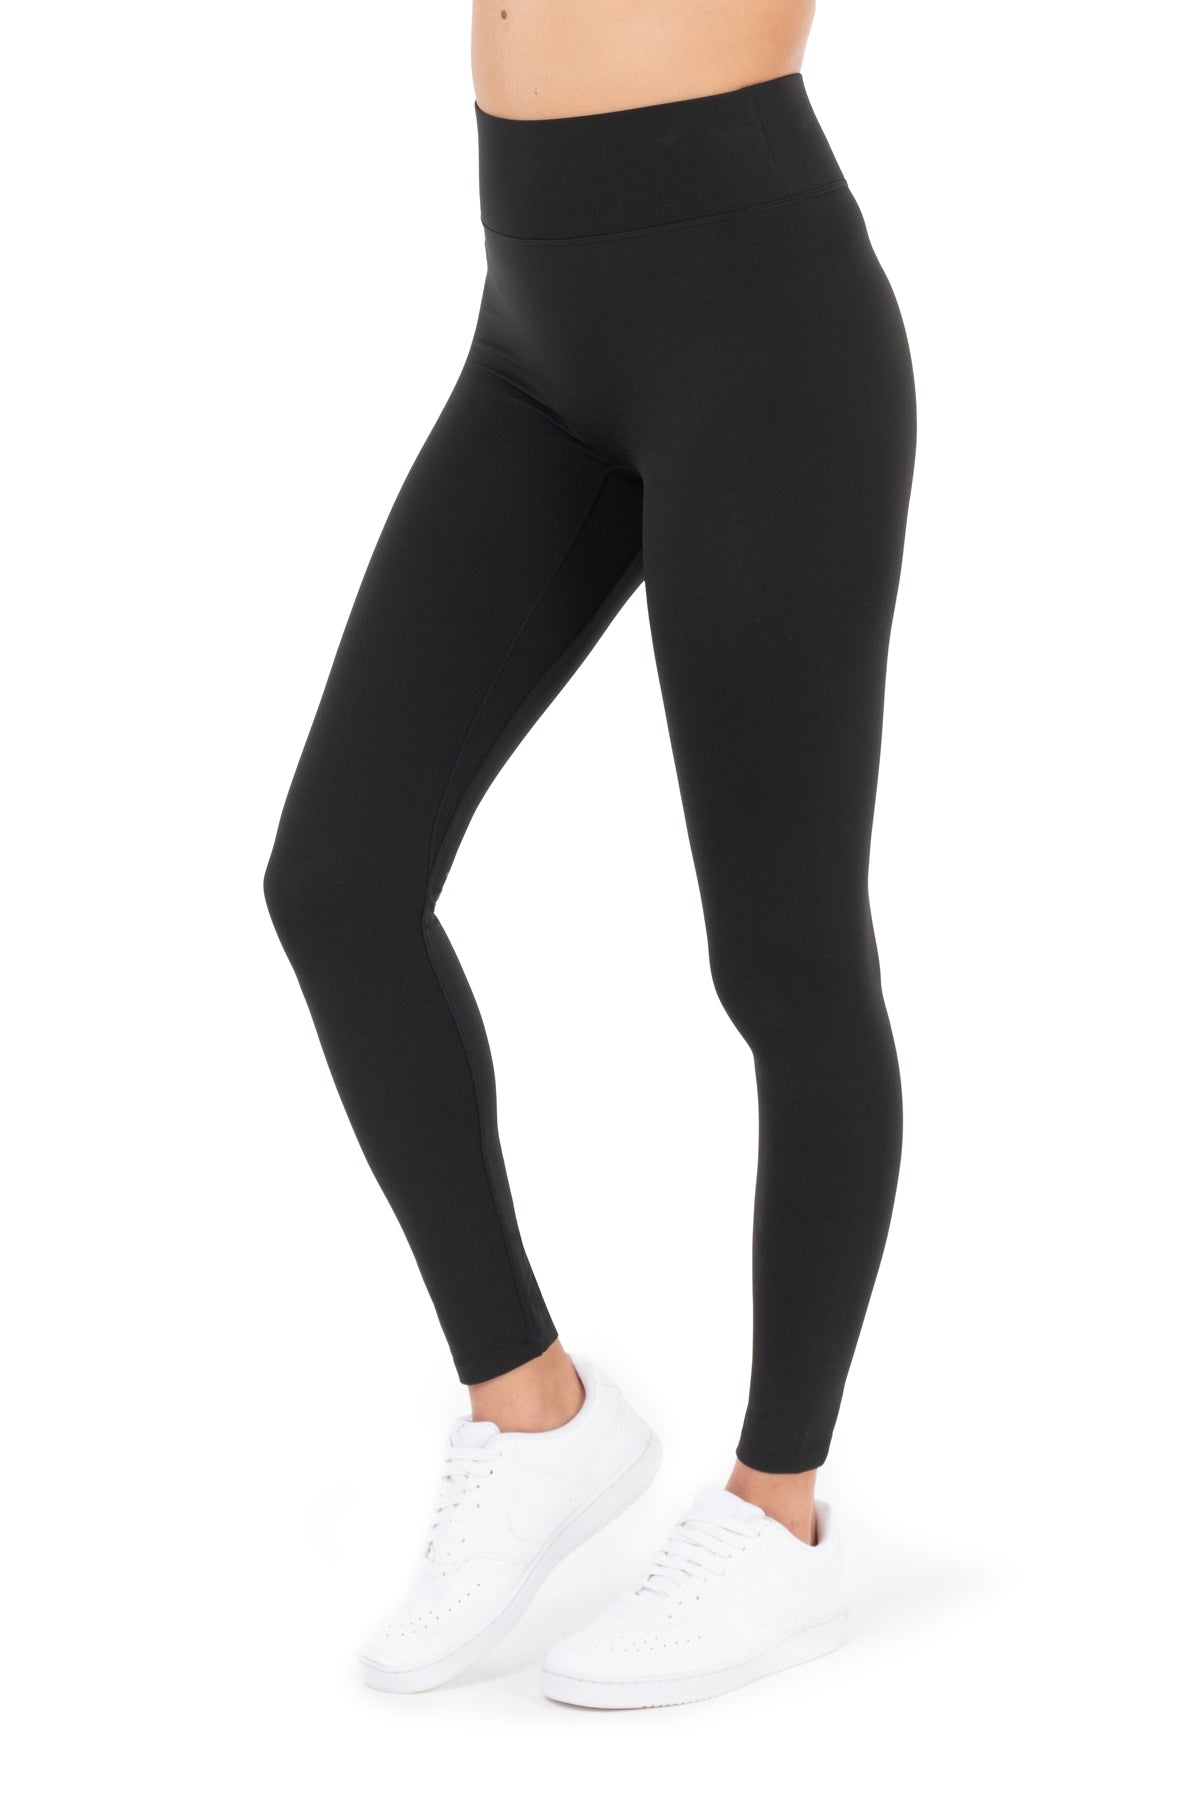 KYODAN FULL LENGTH Black Patterned Leggings Size Medium £7.00 - PicClick UK